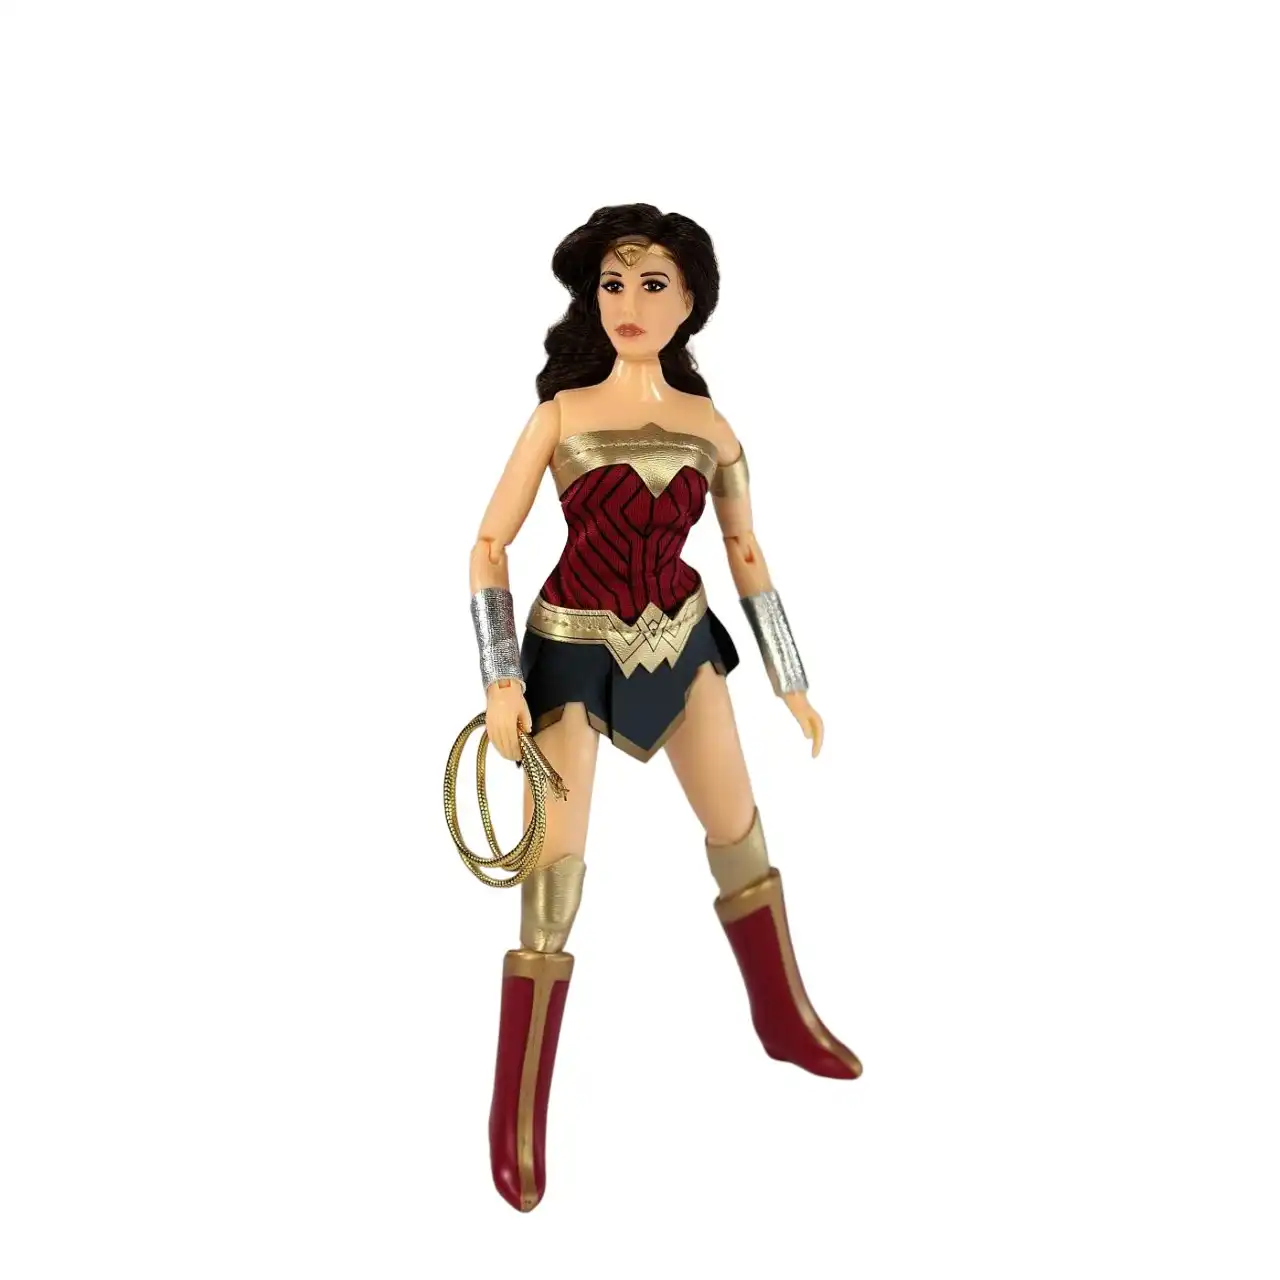 Mego Wonder Woman Action Figures 8"